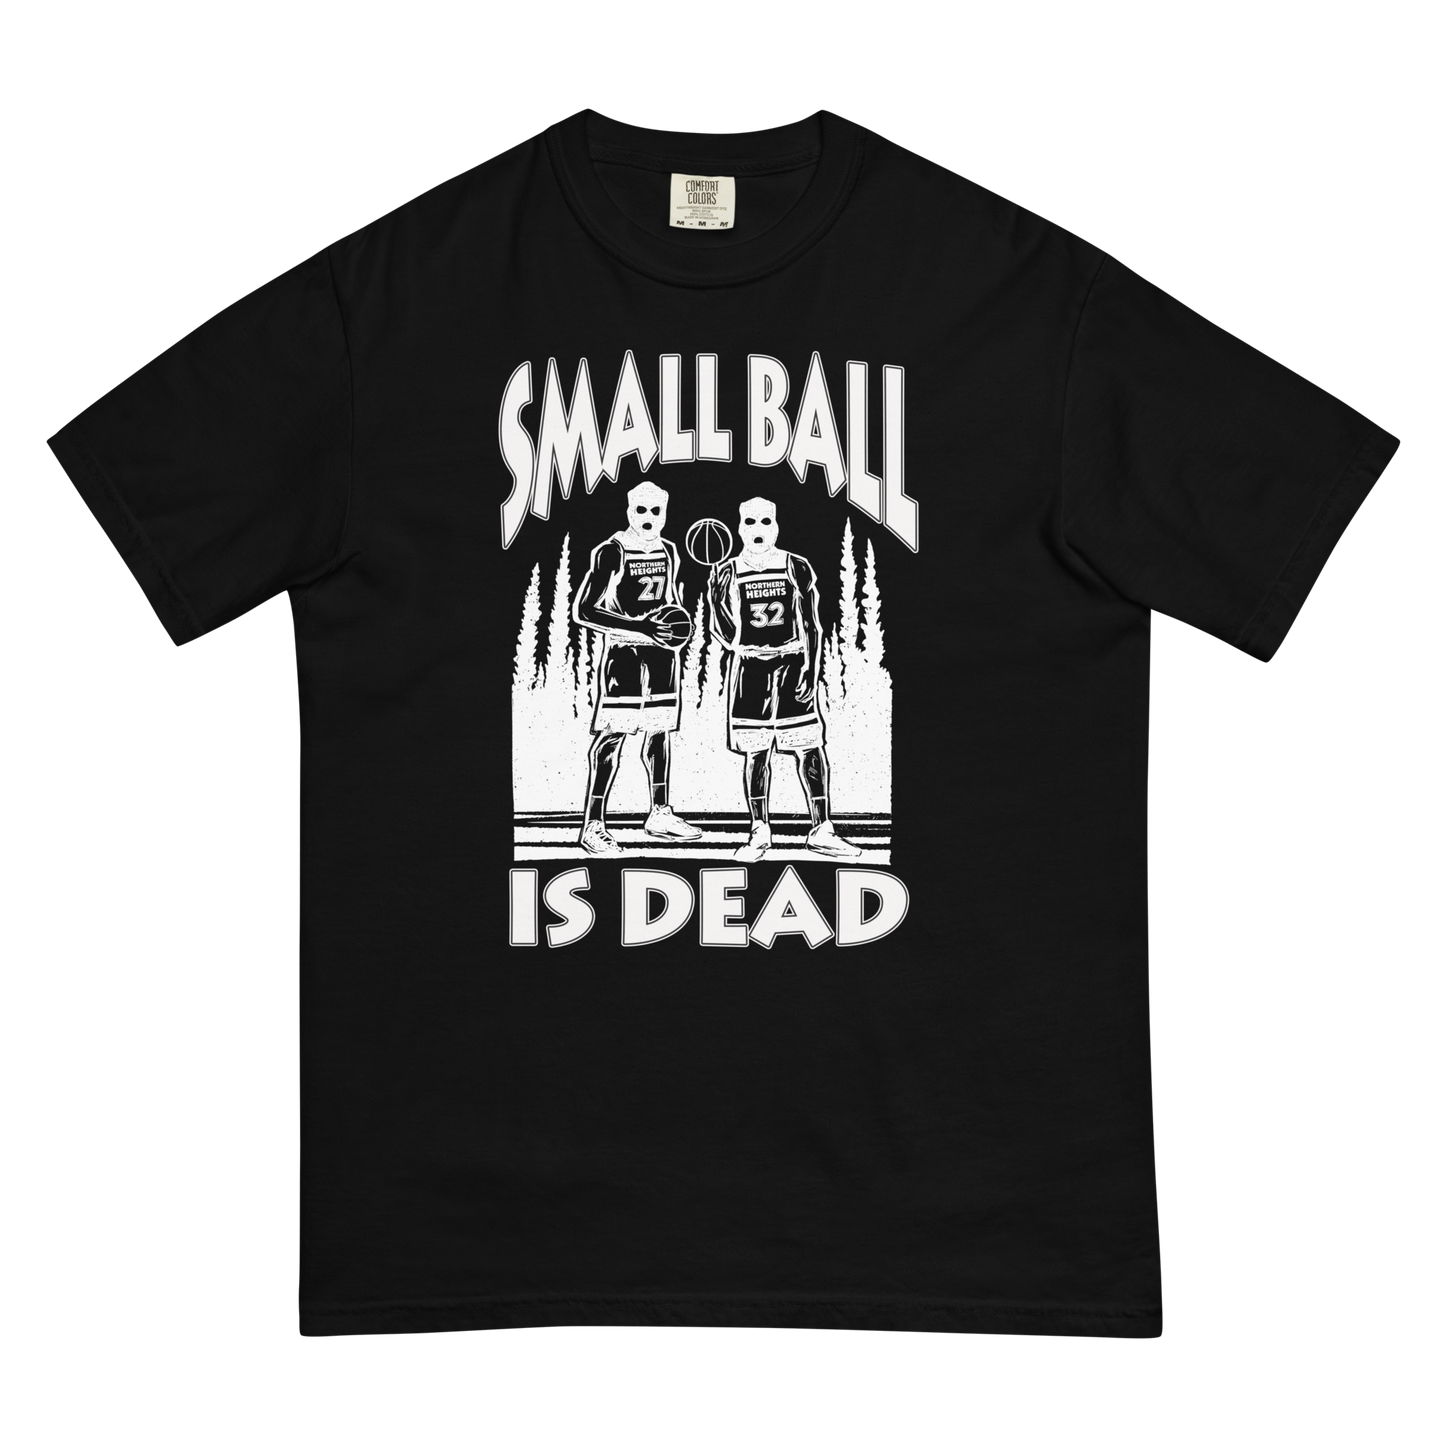 Small Ball is Dead Tee